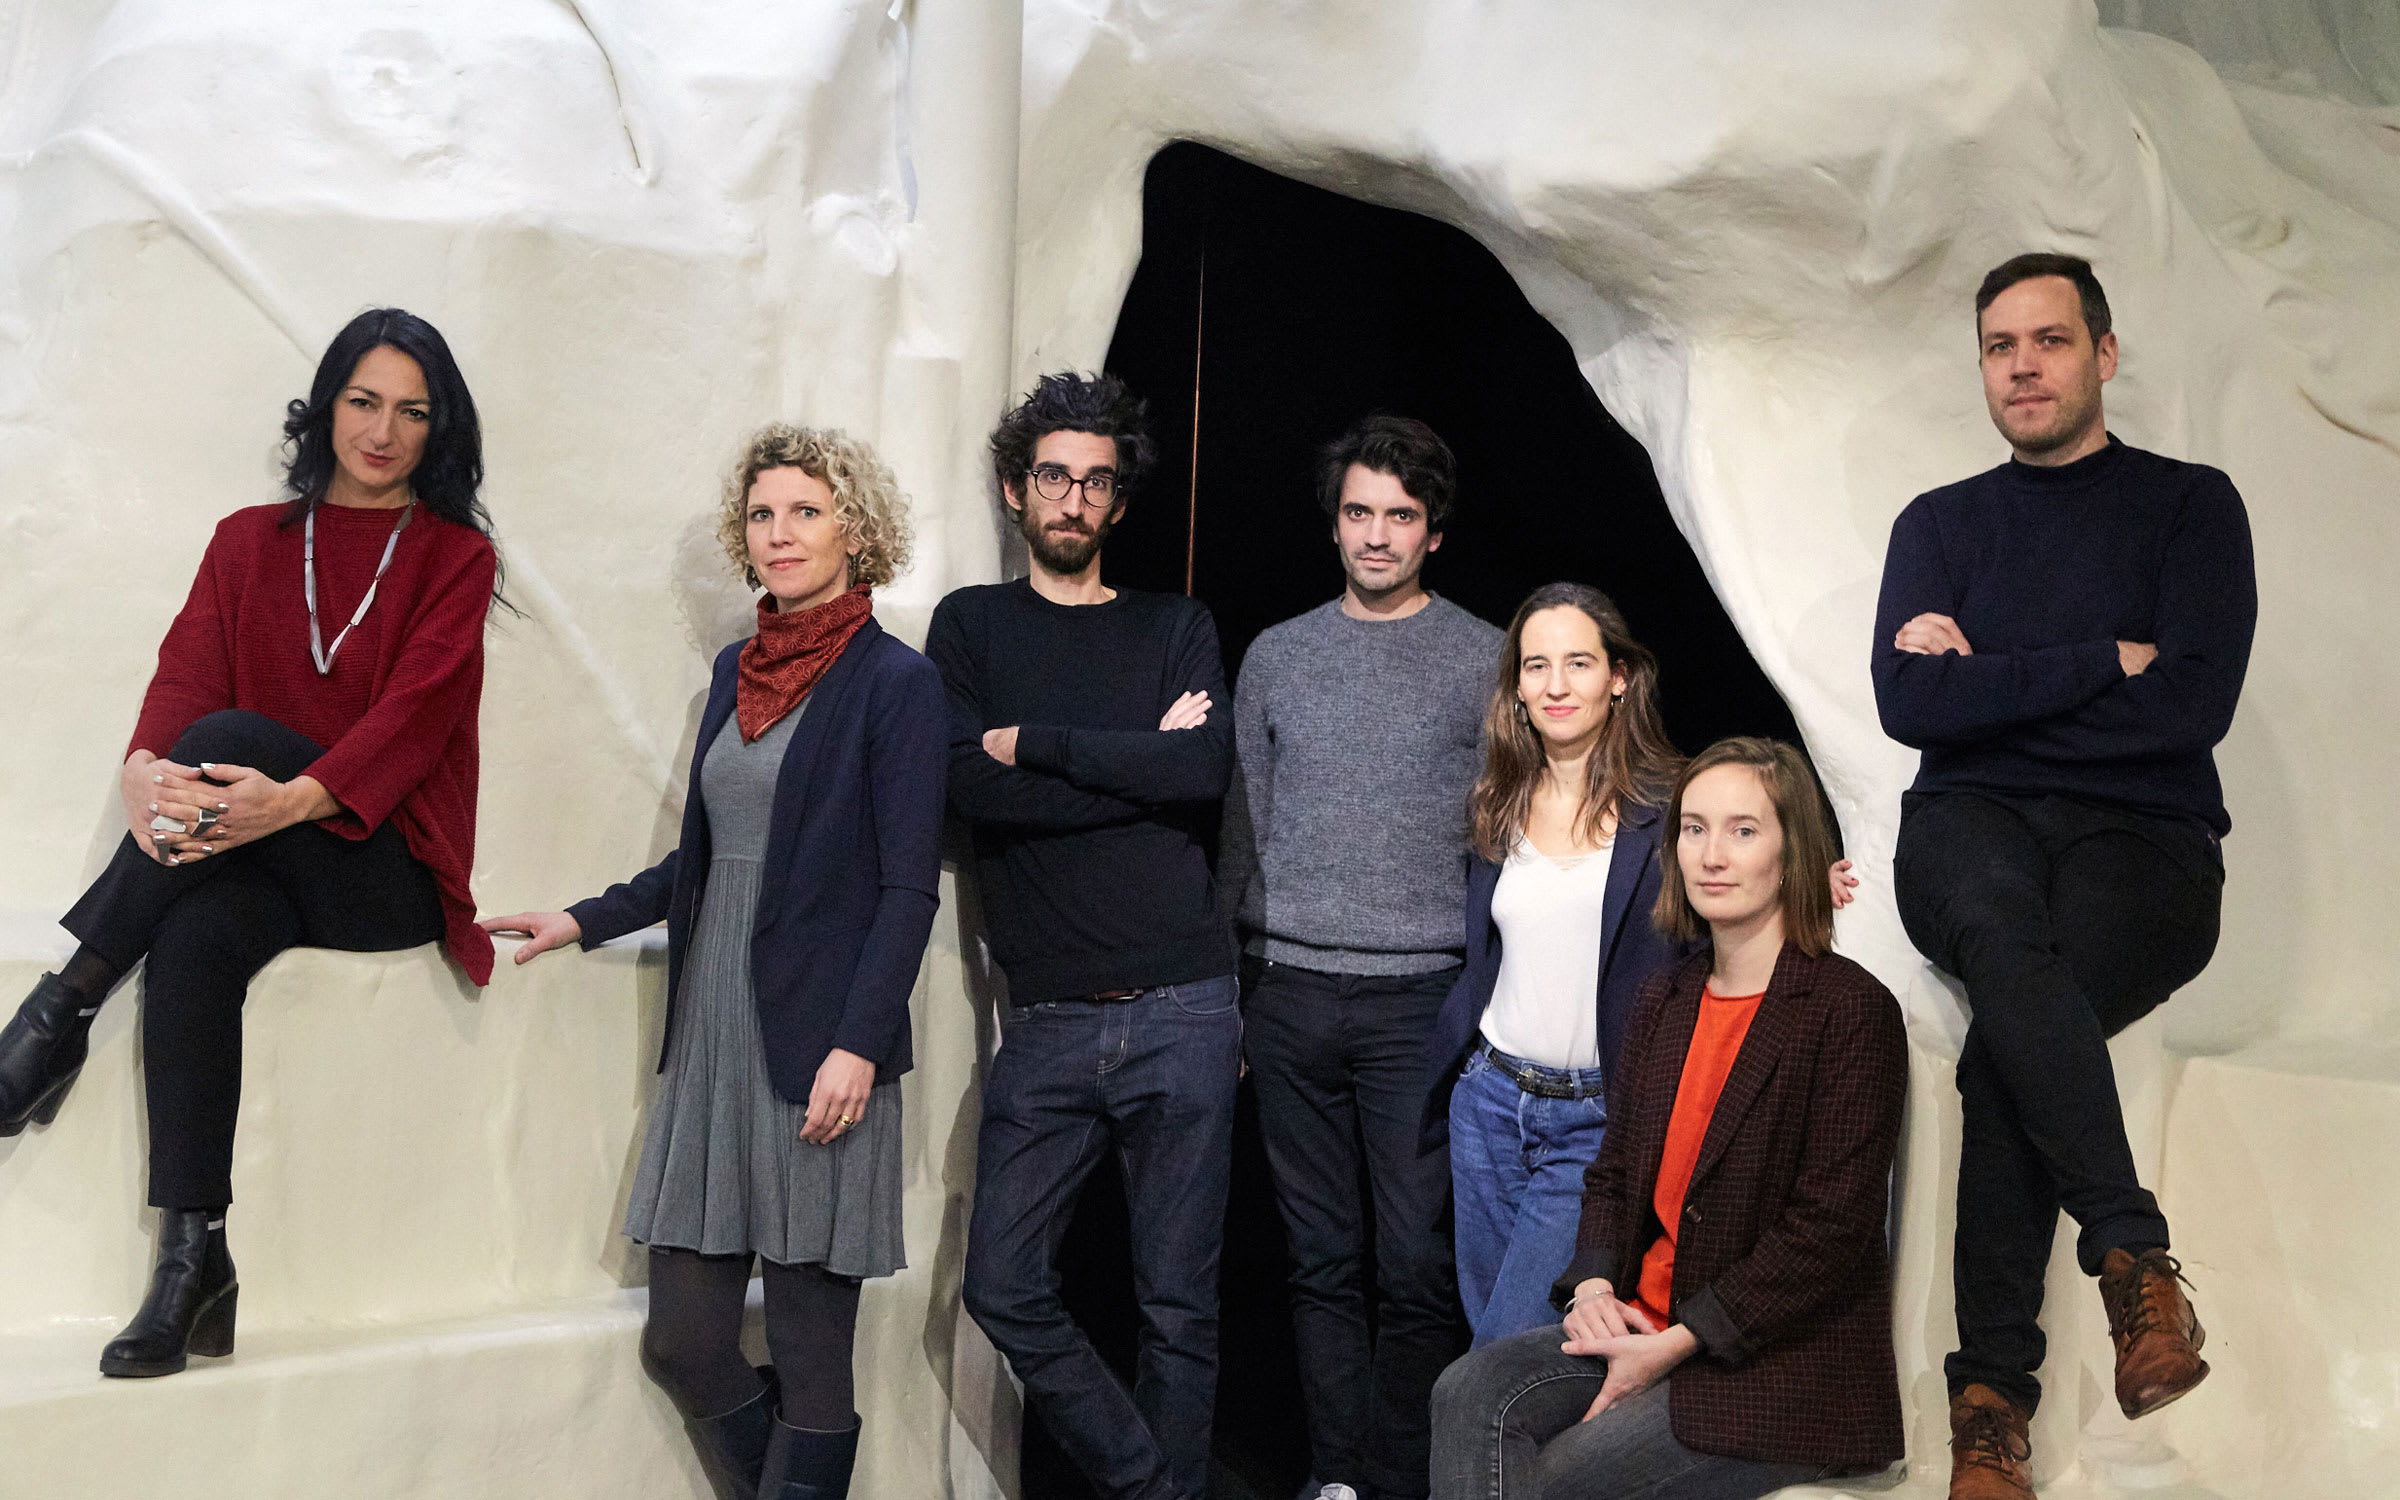 The curators of the upcoming Lyon Biennale, from left to right: Vittoria Mararrese, Daria de Beauvais, Yoann Gourmel, Hugo Vitrani, Claire Moulène, Adélaïde Blanc, and Matthieu Lelièvre.